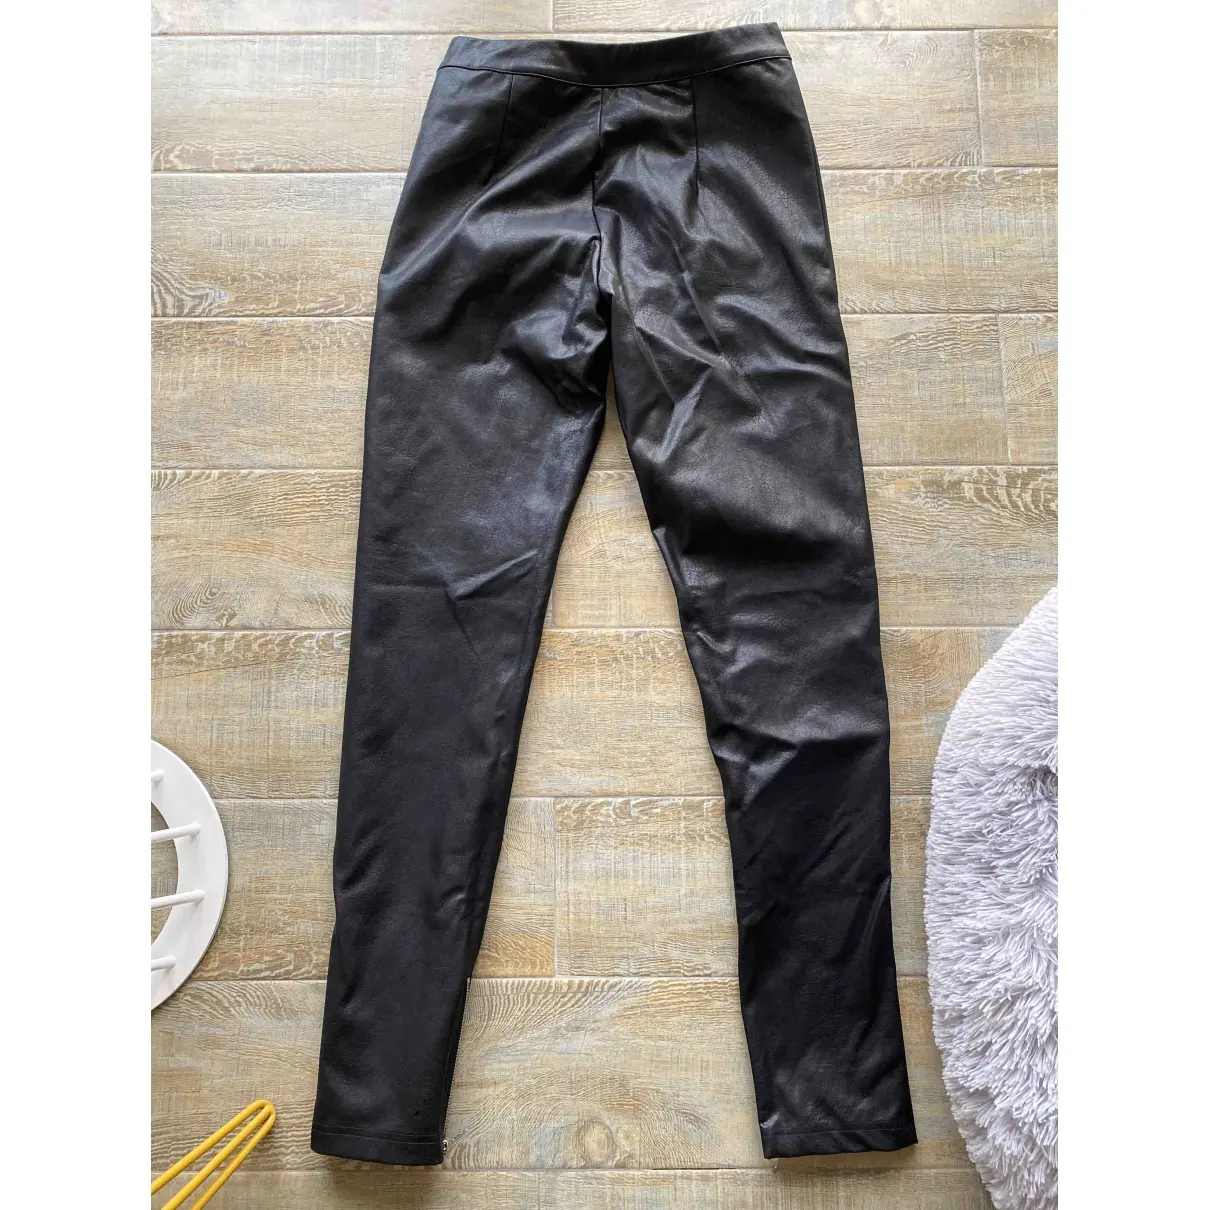 Danielle Guizio Leather trousers for sale